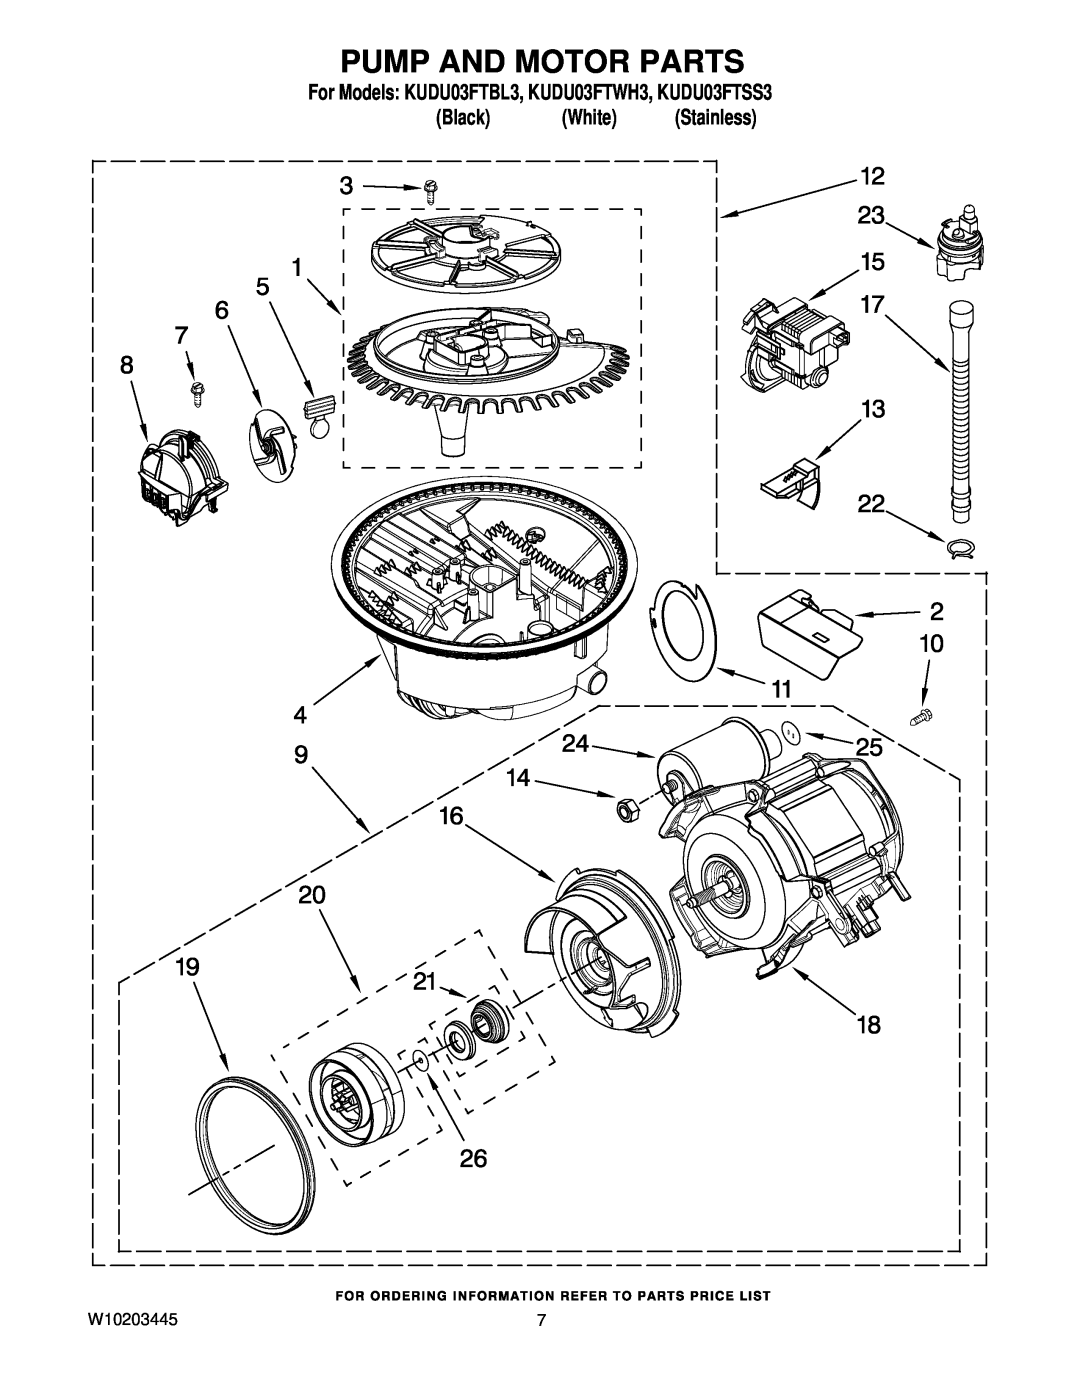 KitchenAid manual Pump And Motor Parts, For Models KUDU03FTBL3, KUDU03FTWH3, KUDU03FTSS3, Black White Stainless 